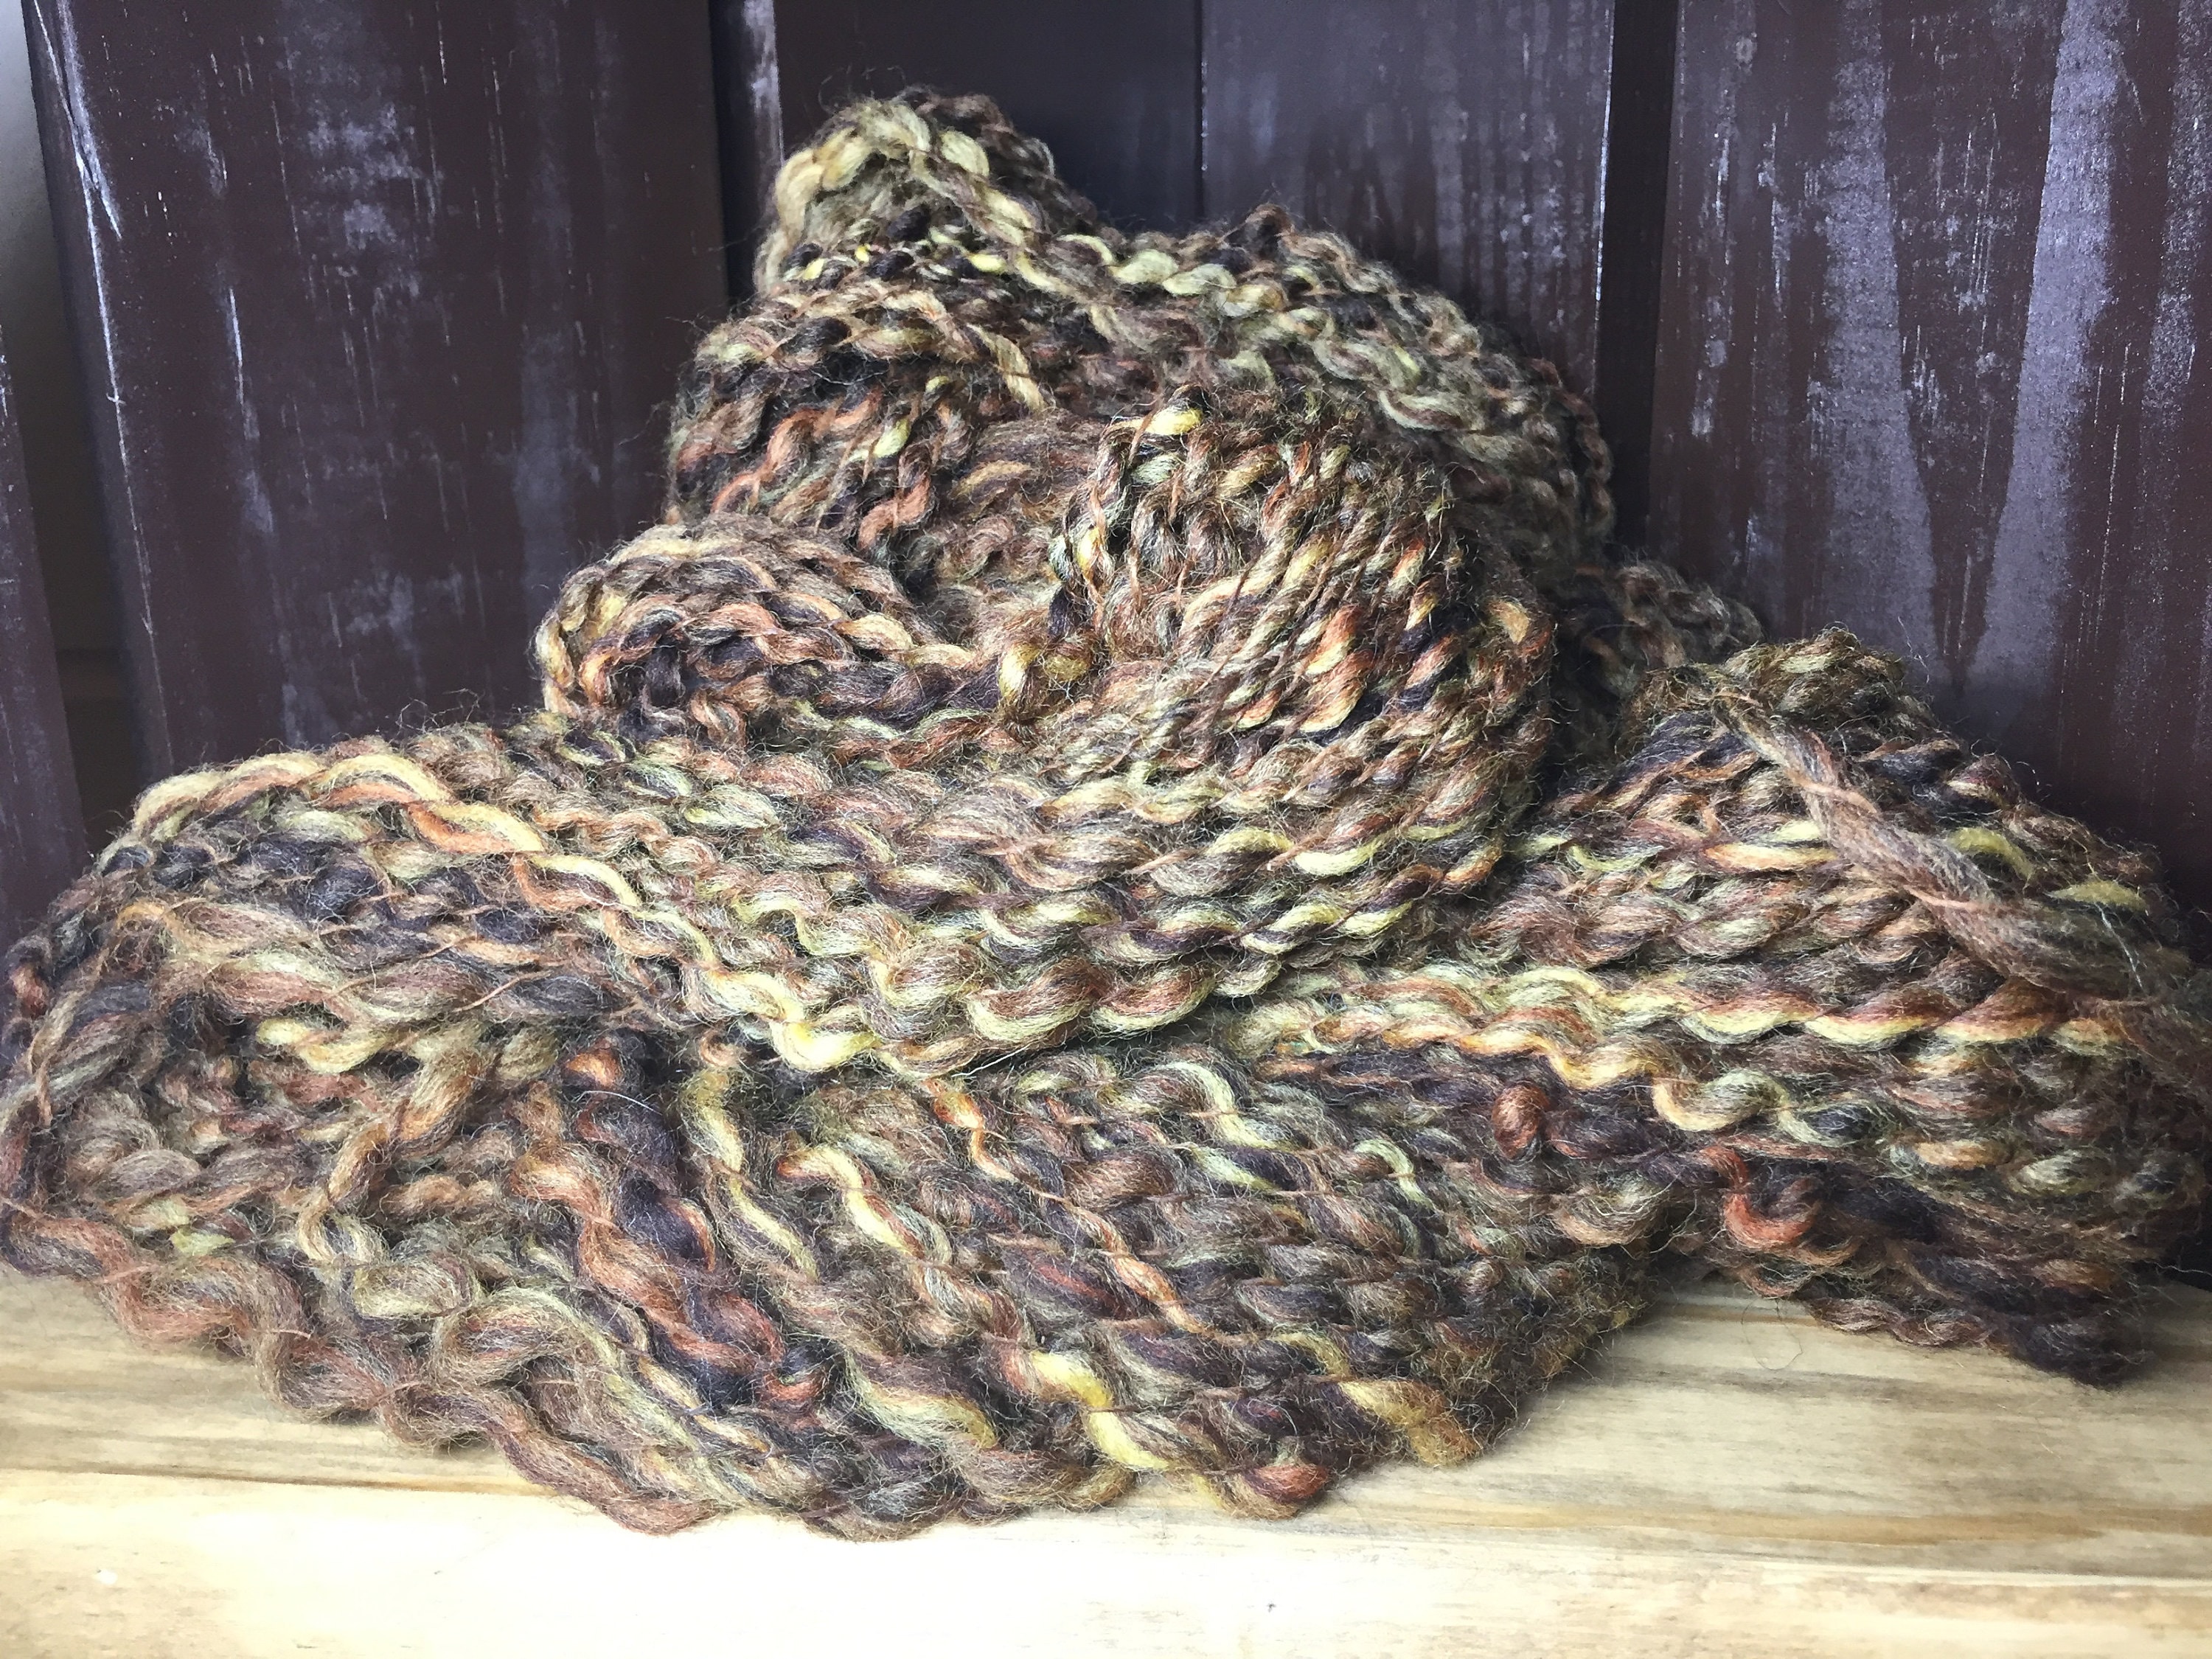 Barnwood - hand spun textured yarn